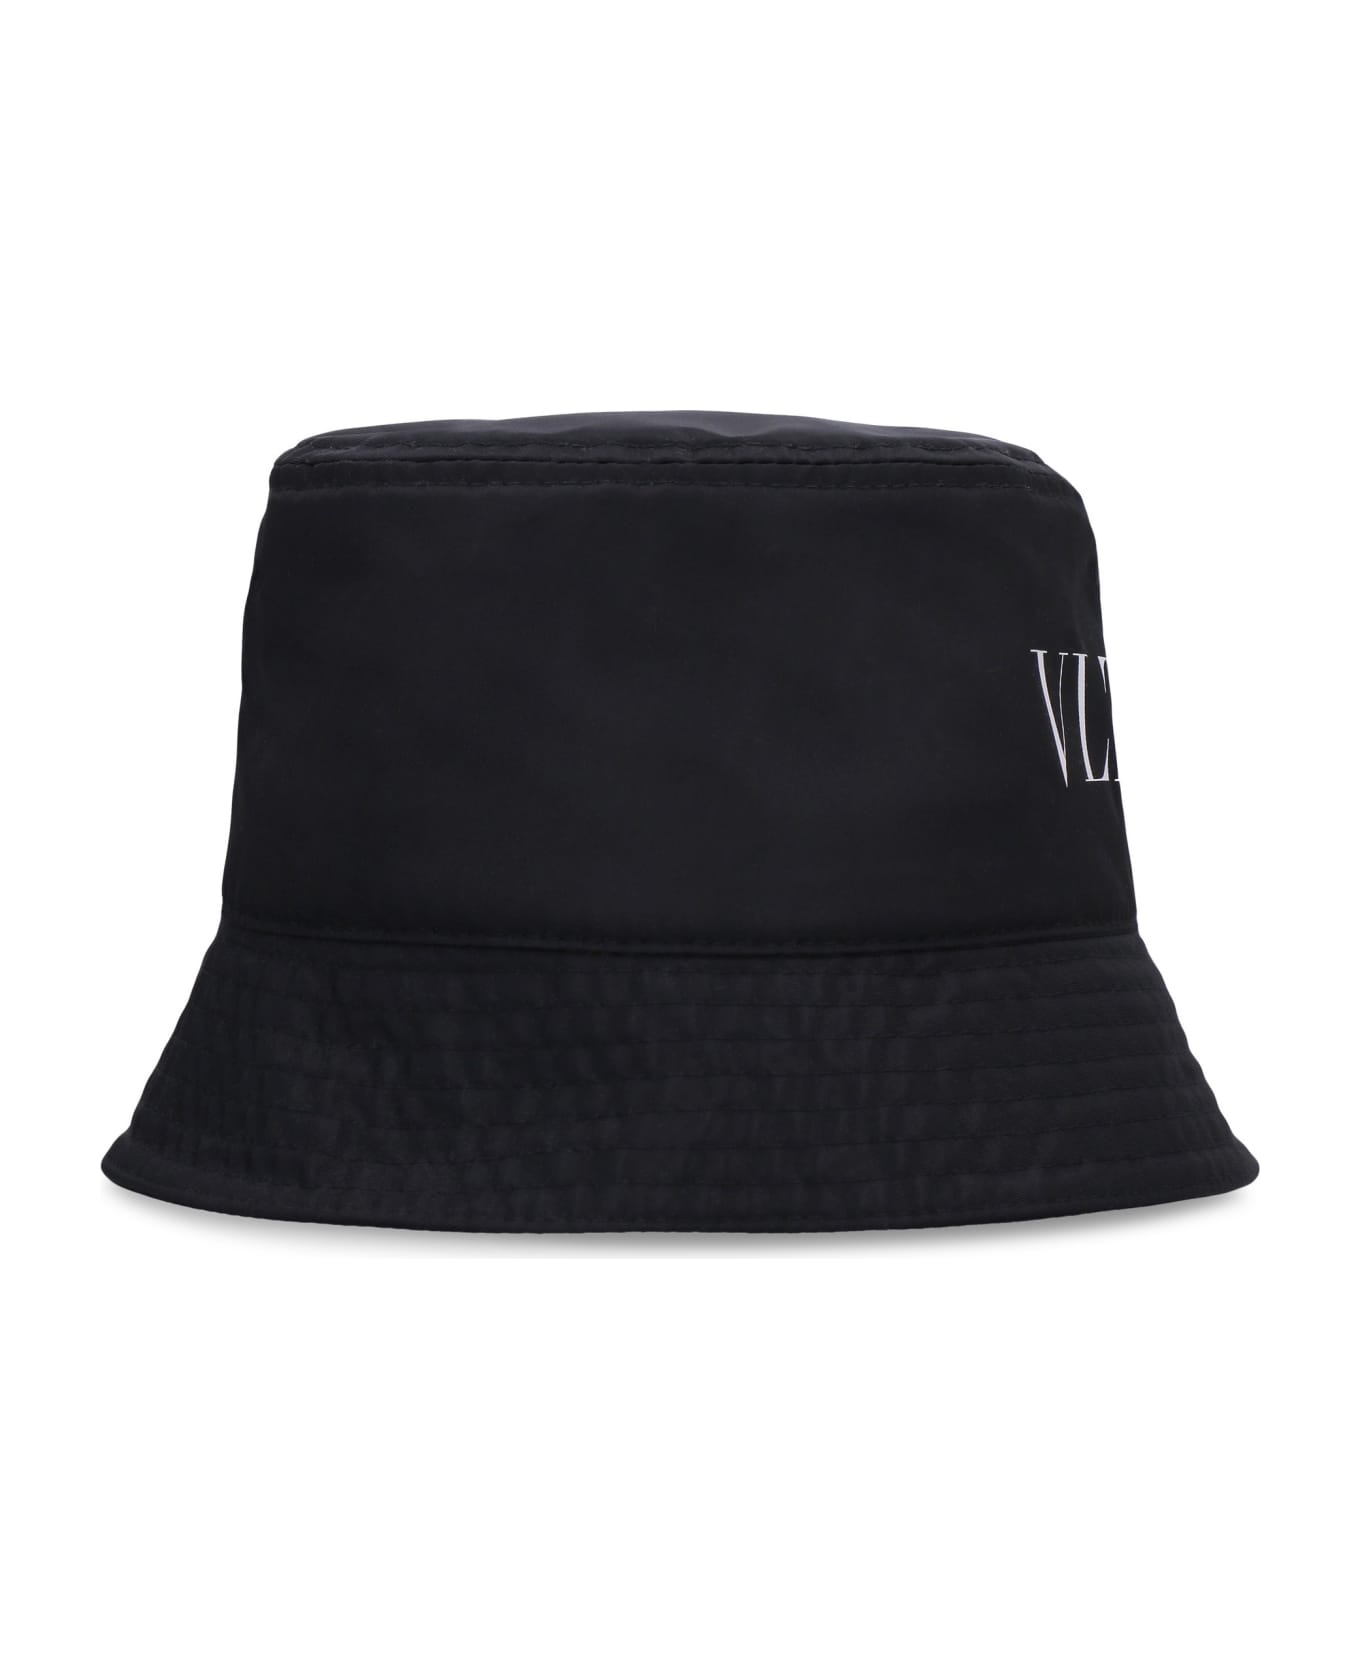 Valentino Garavani - Vltn Bucket Hat - black